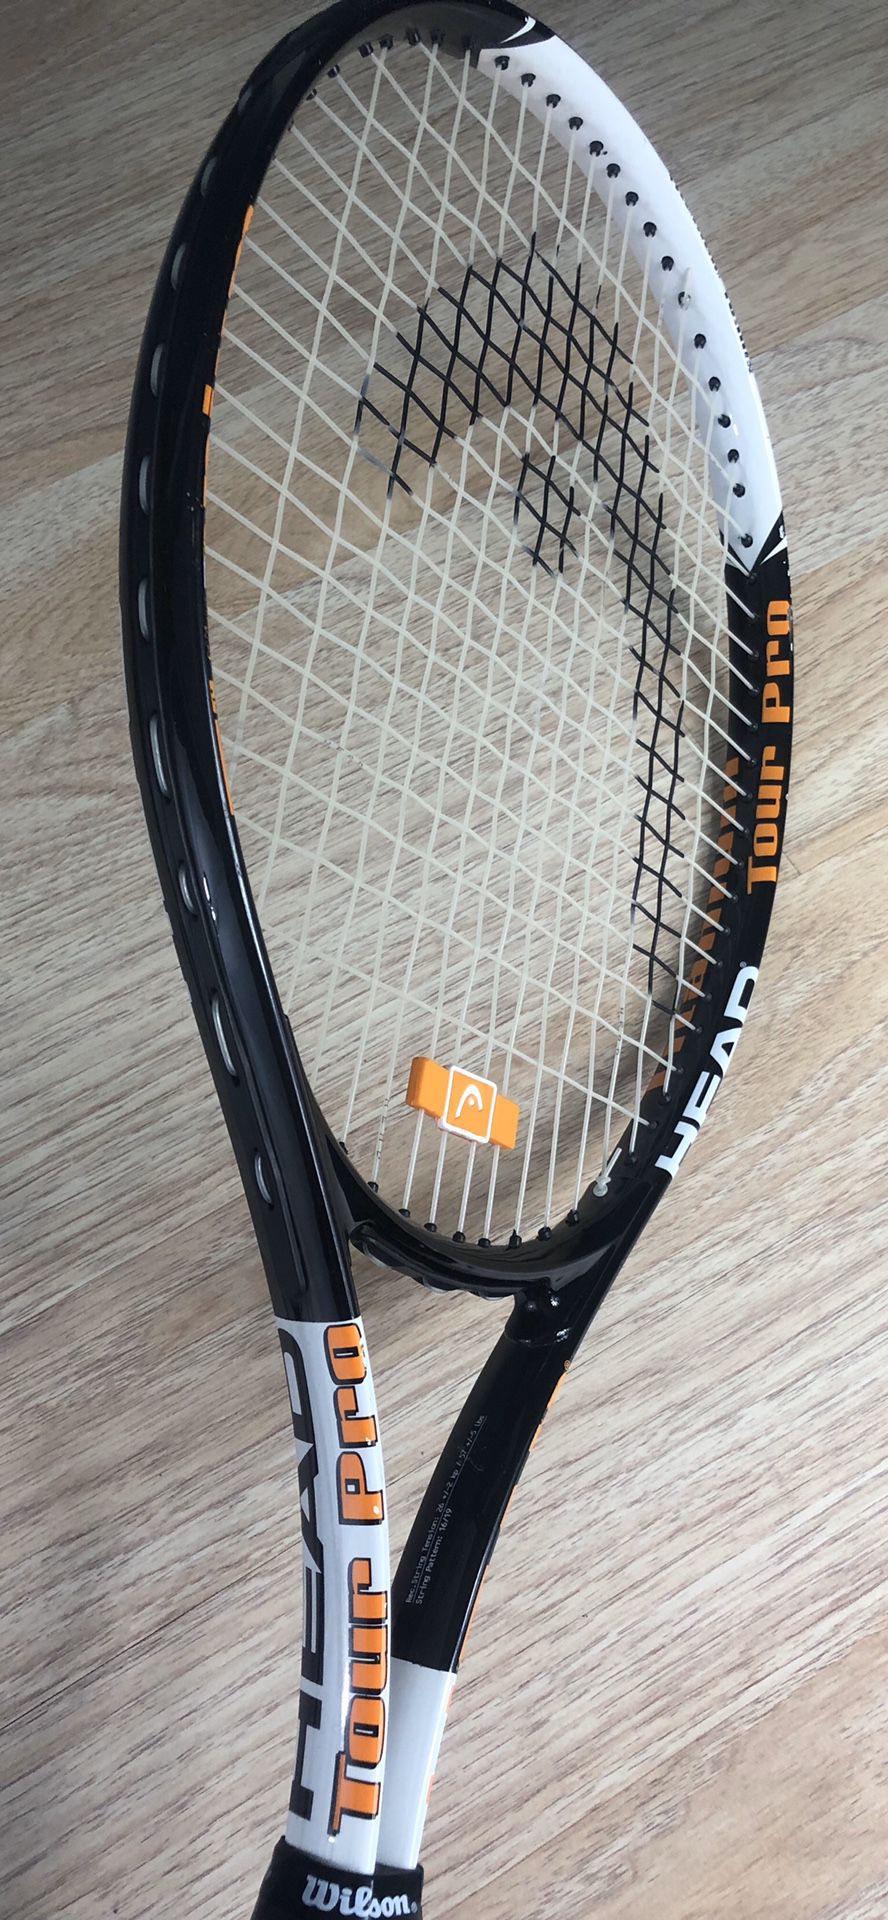 Tennis Racket Titanium Head Tour Pro Original 4 1/4 2 Black/white/orange